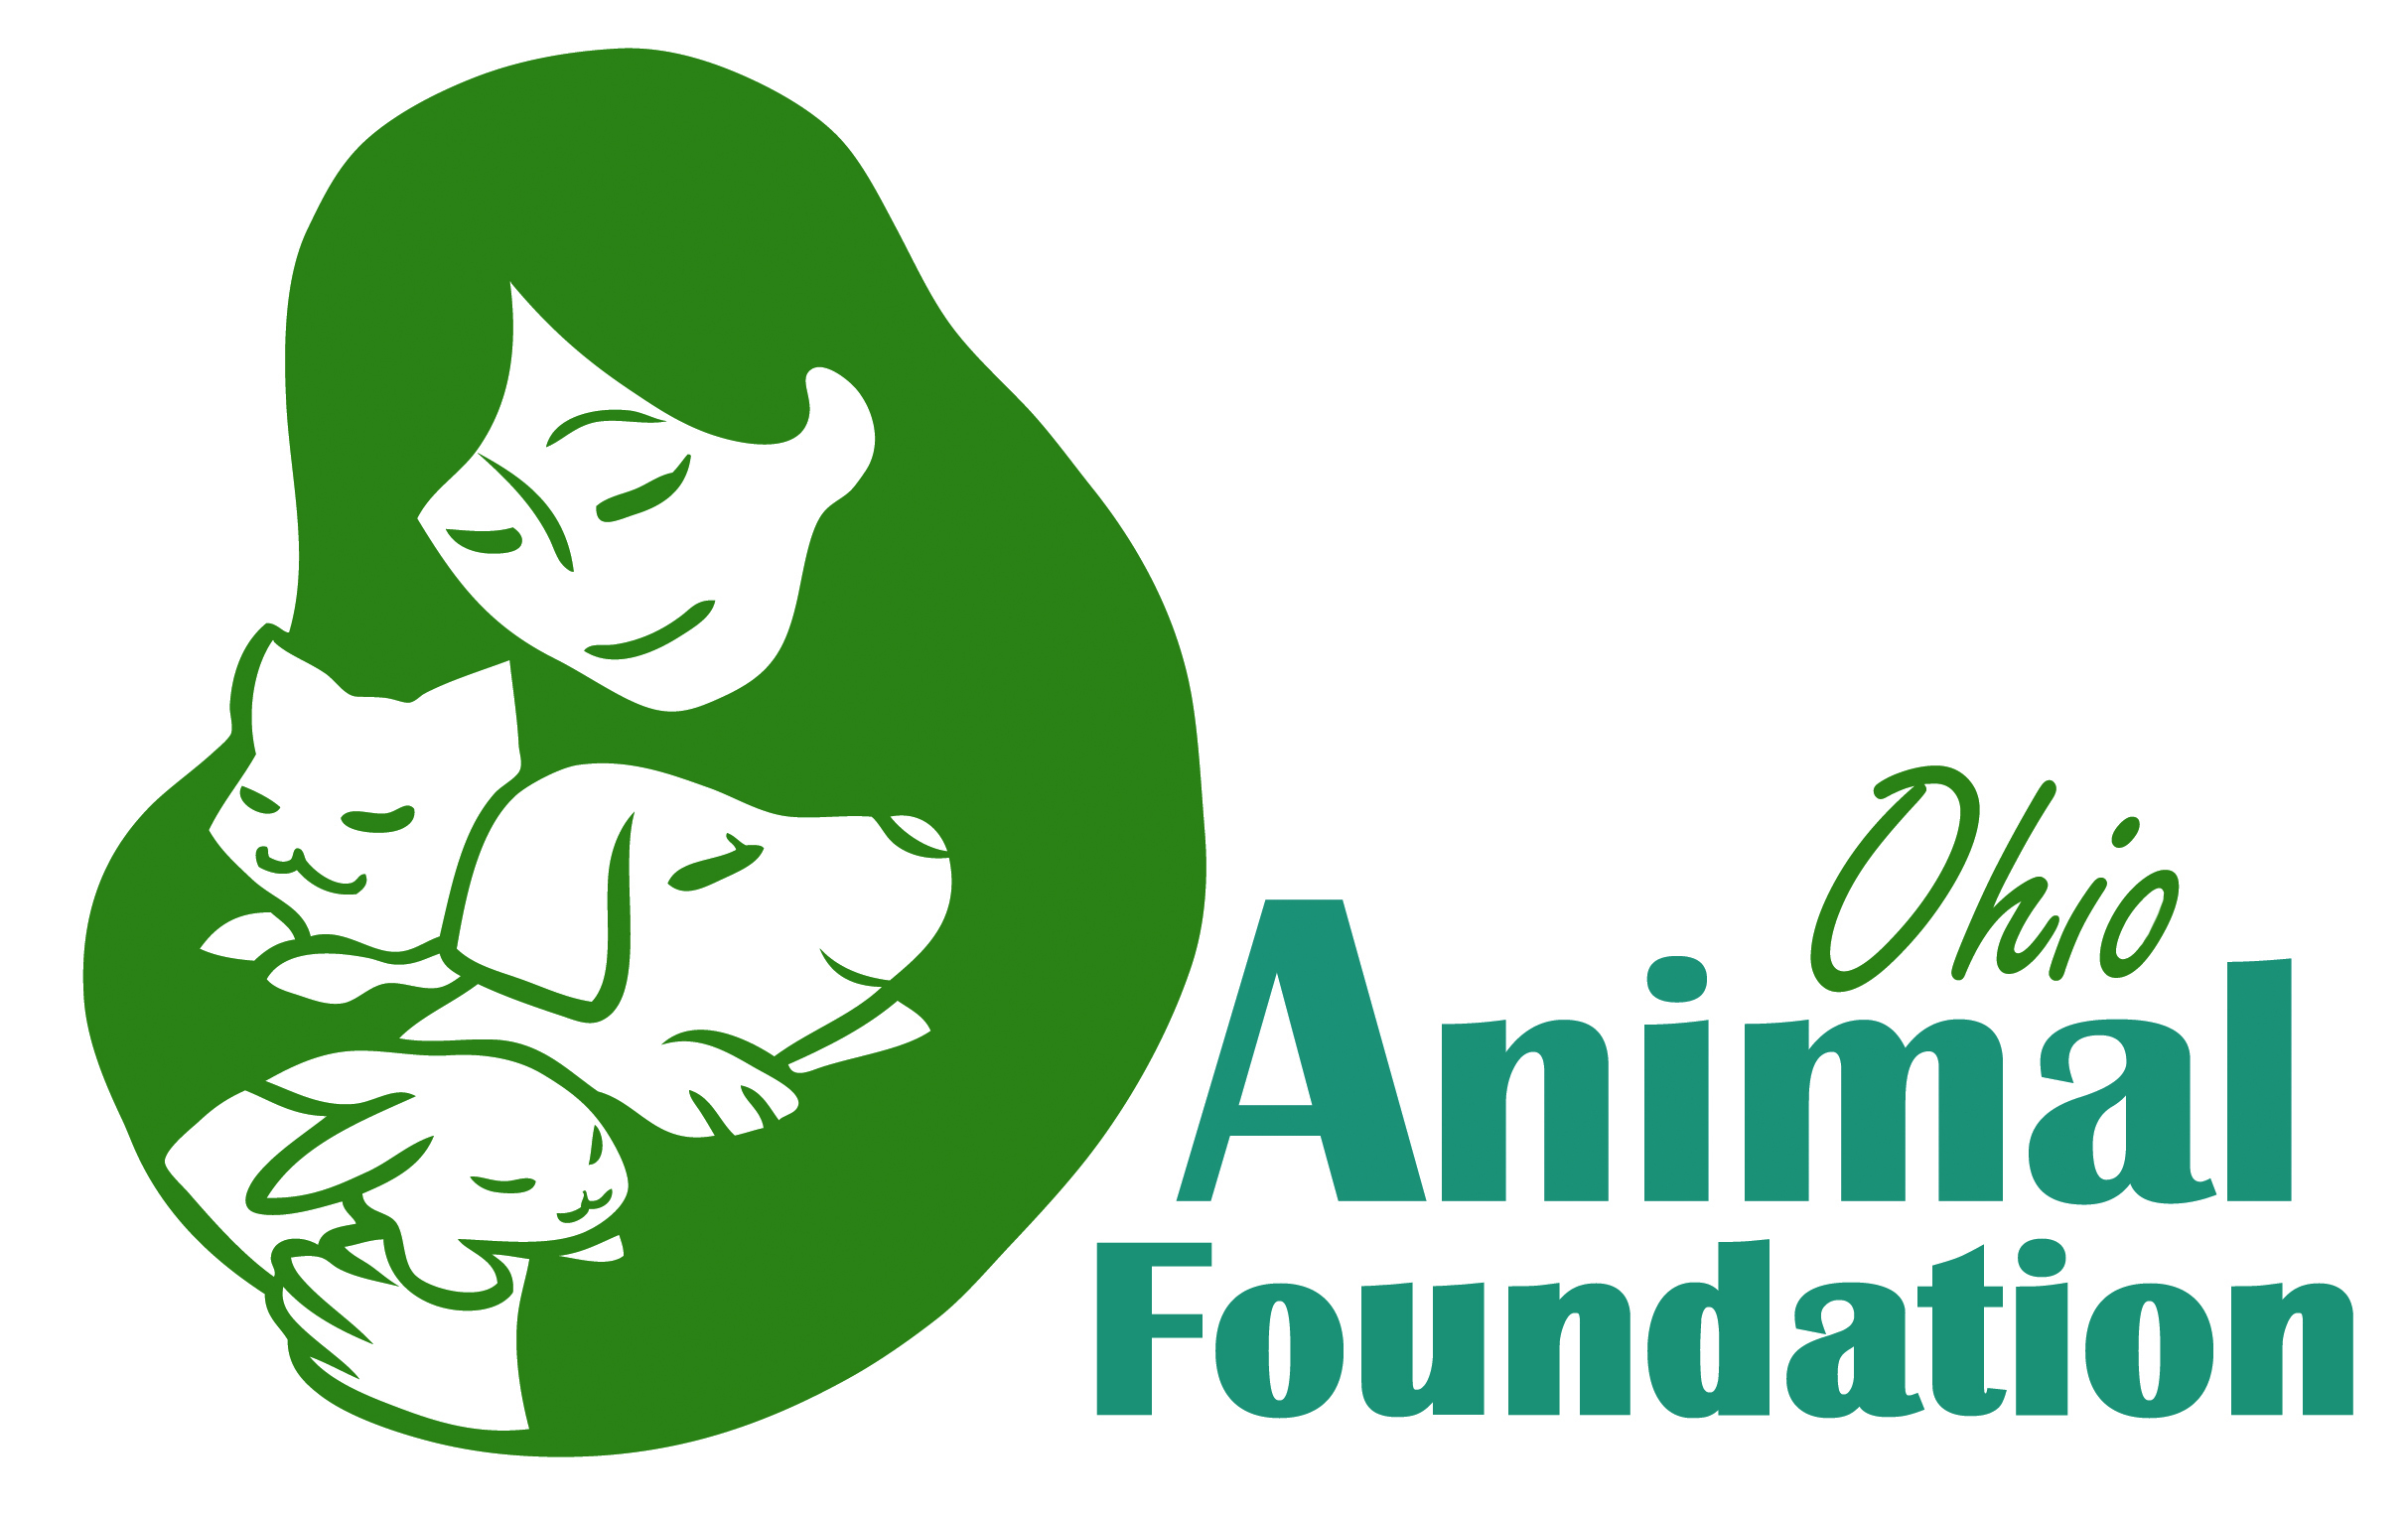 Ohio Animal Foundation Logo.jpg (844 kb)